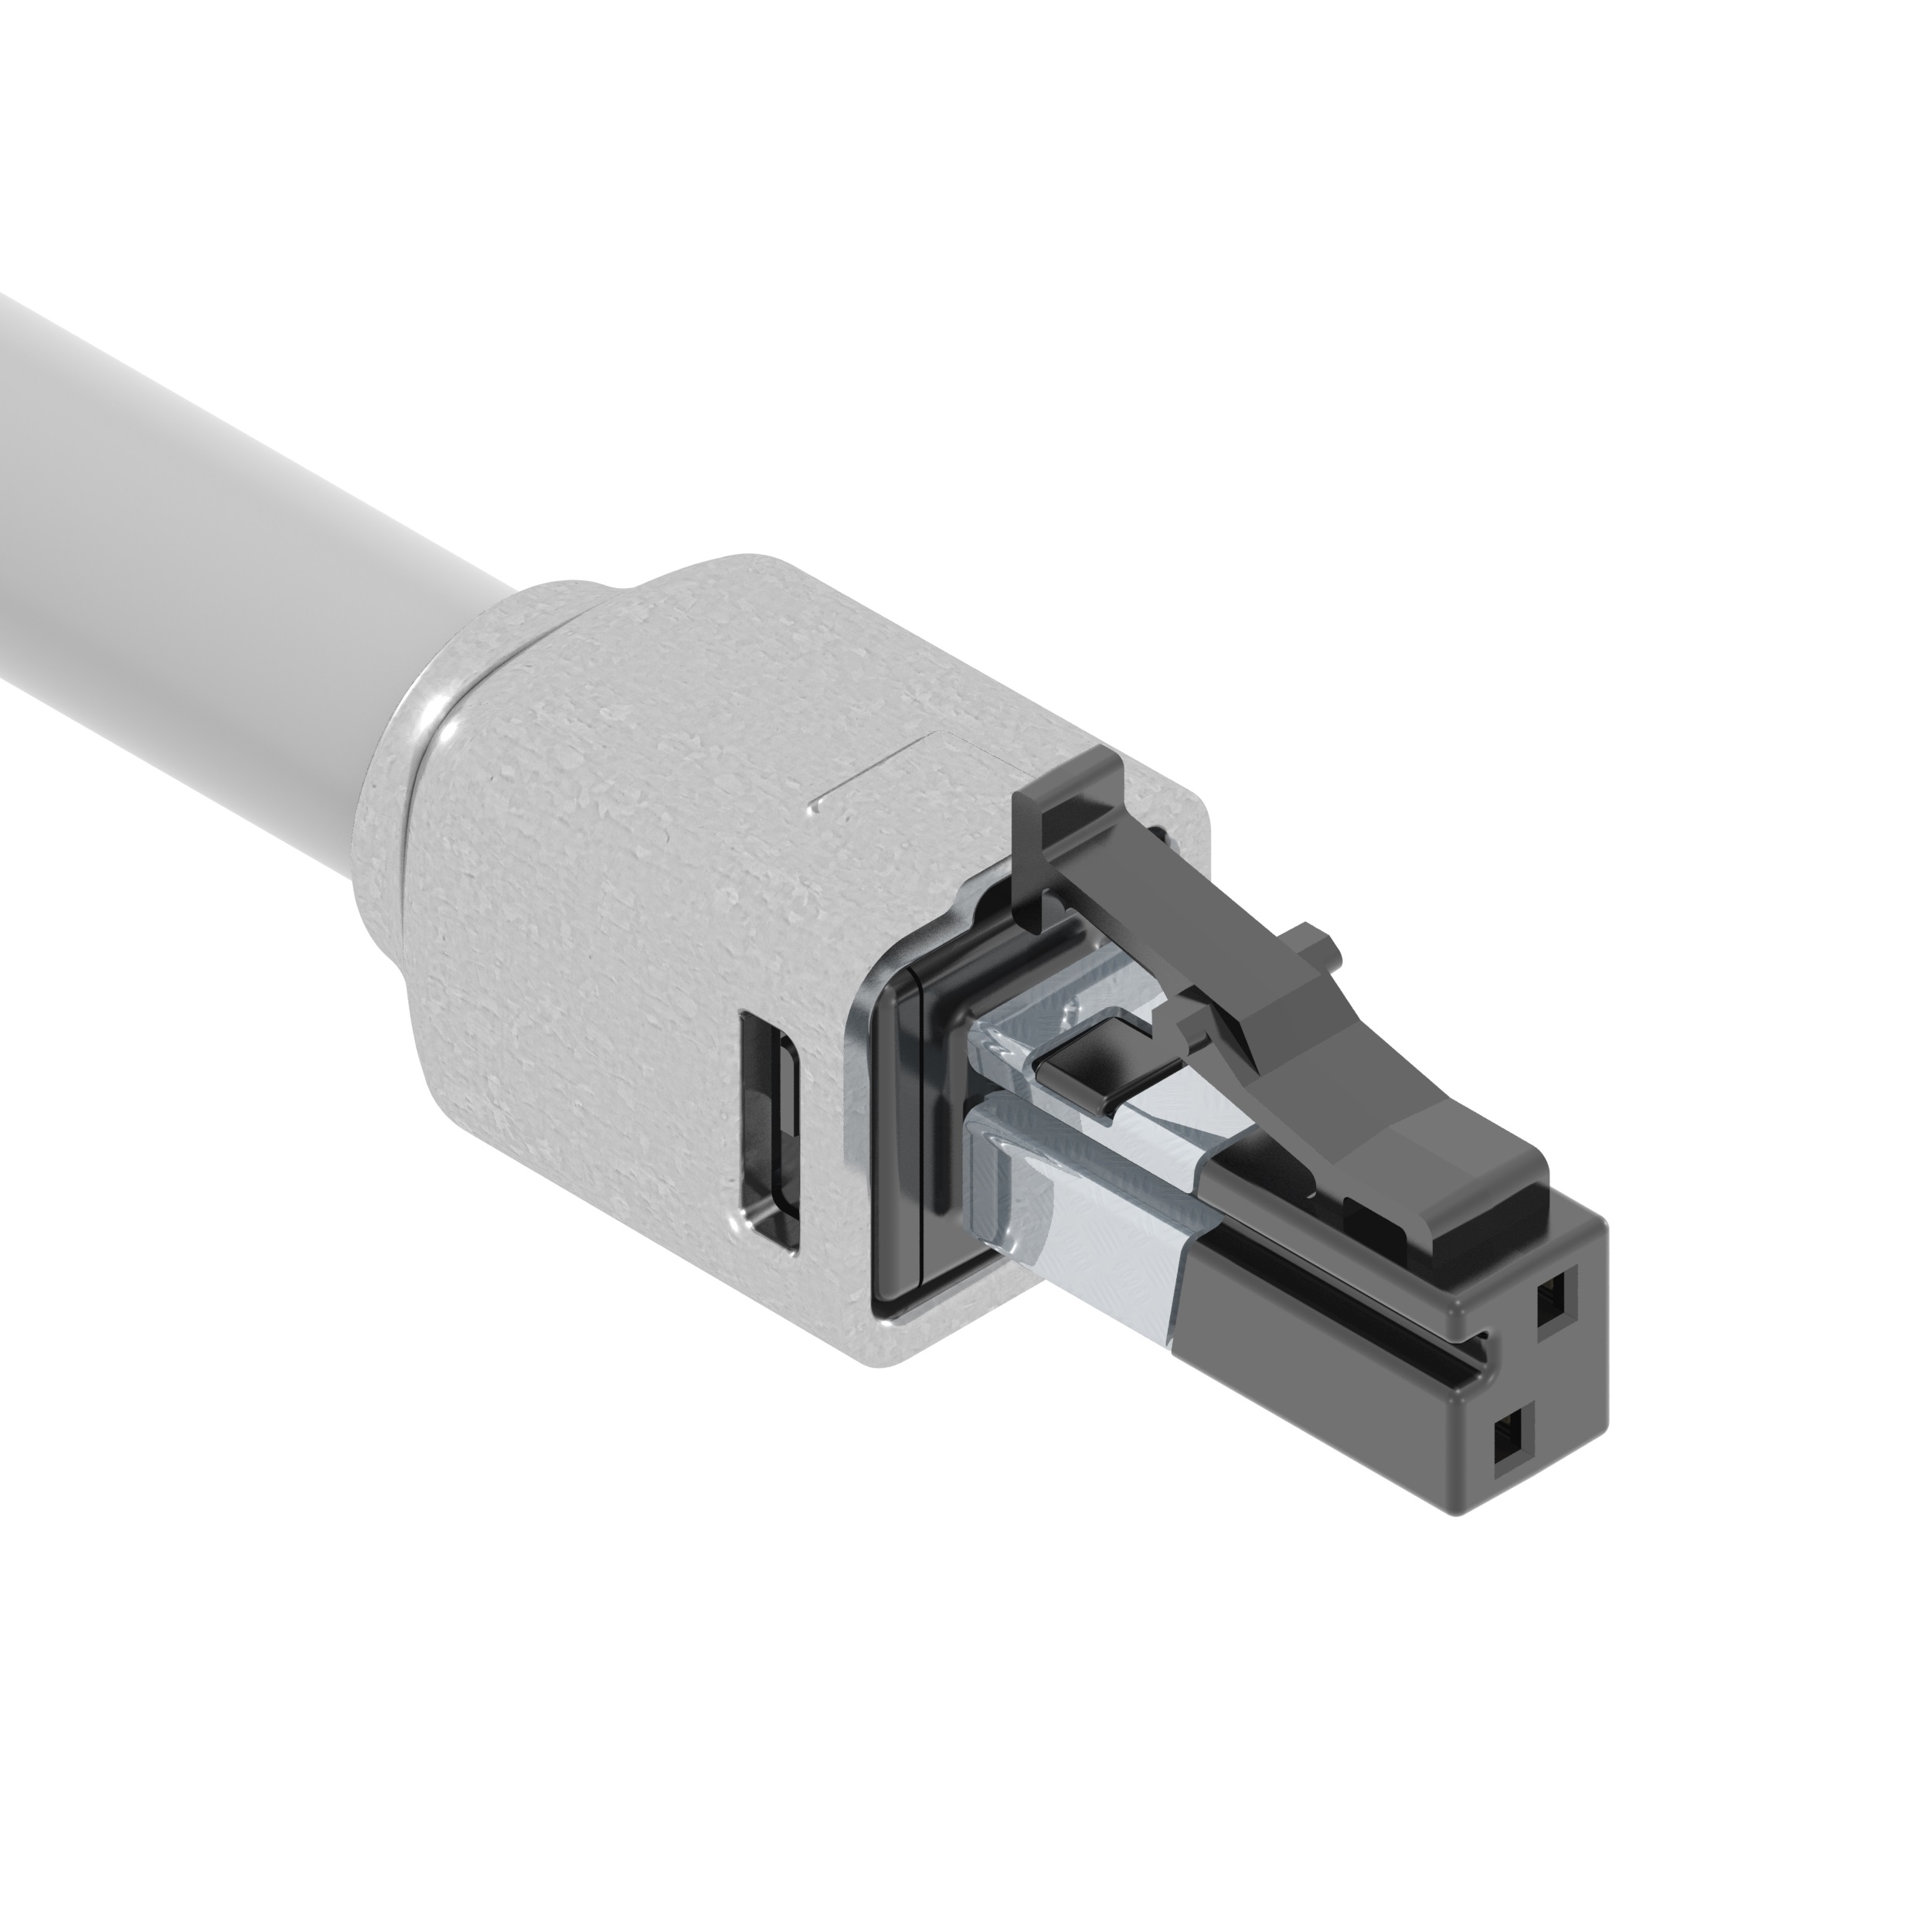 SP1 Single Pair Ethernet Shielded Plug Connector